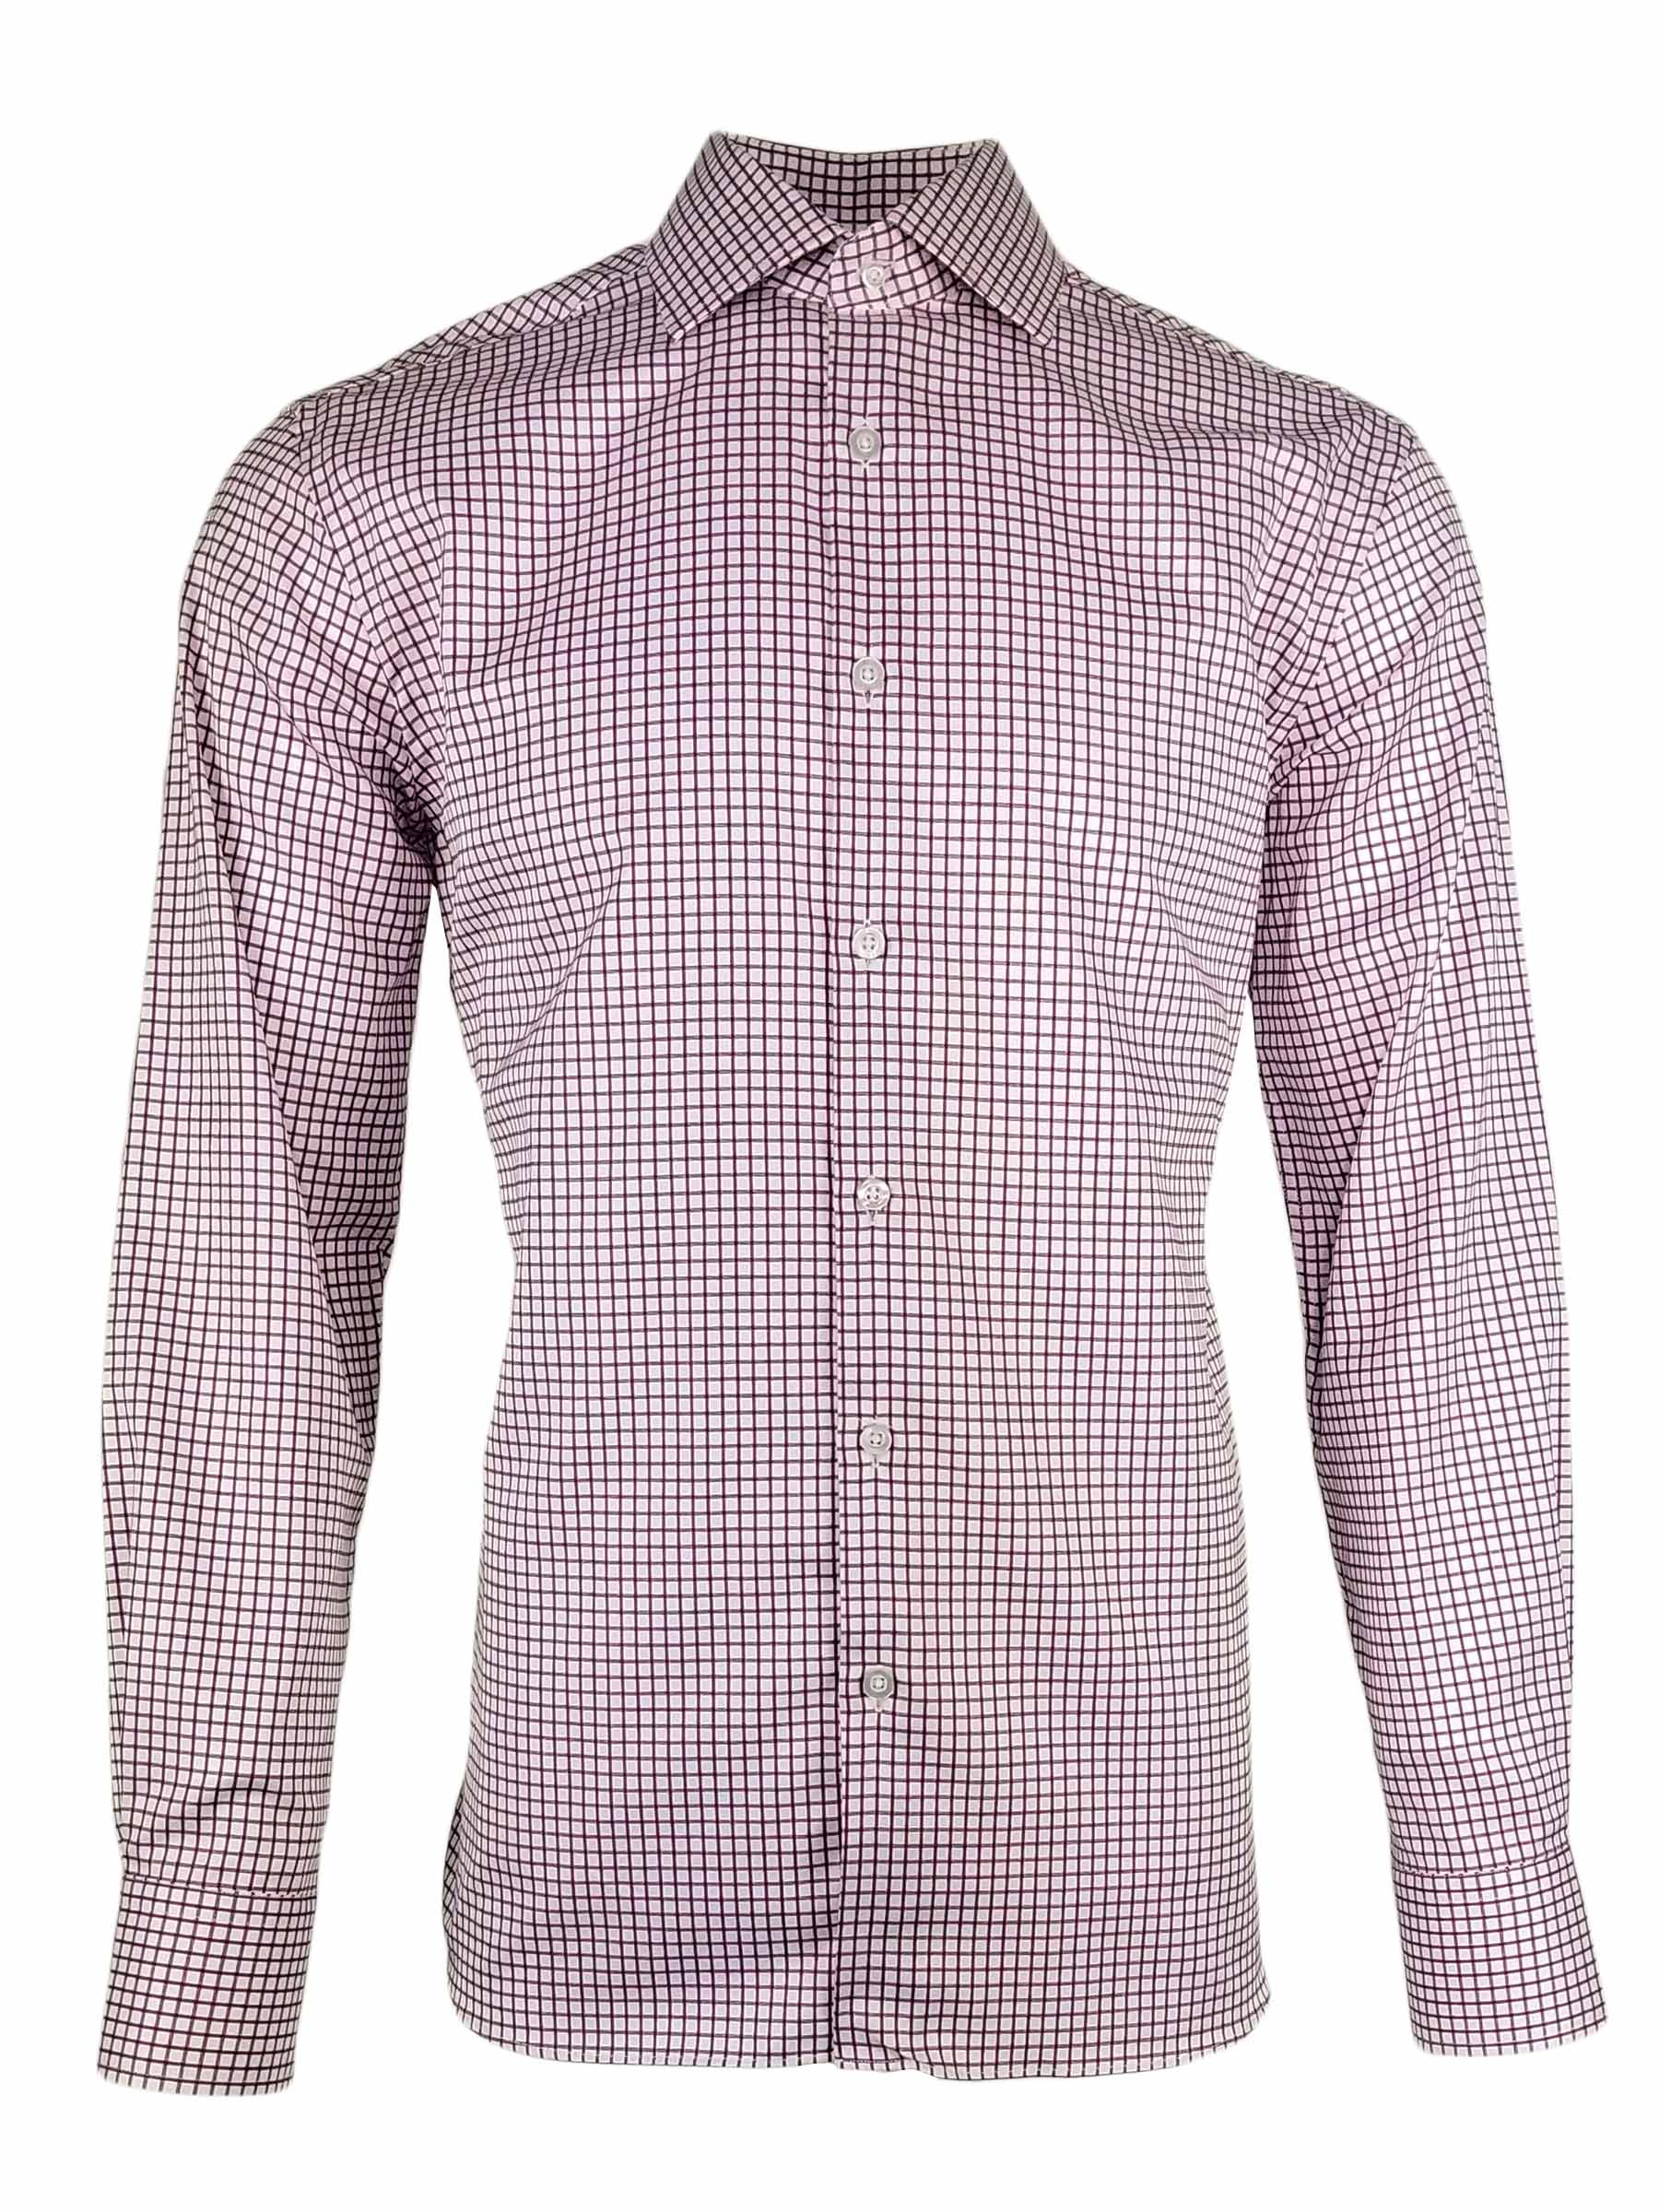 Men's Himalaya Shirt - Grape Check Long Sleeve - Uniform Edit